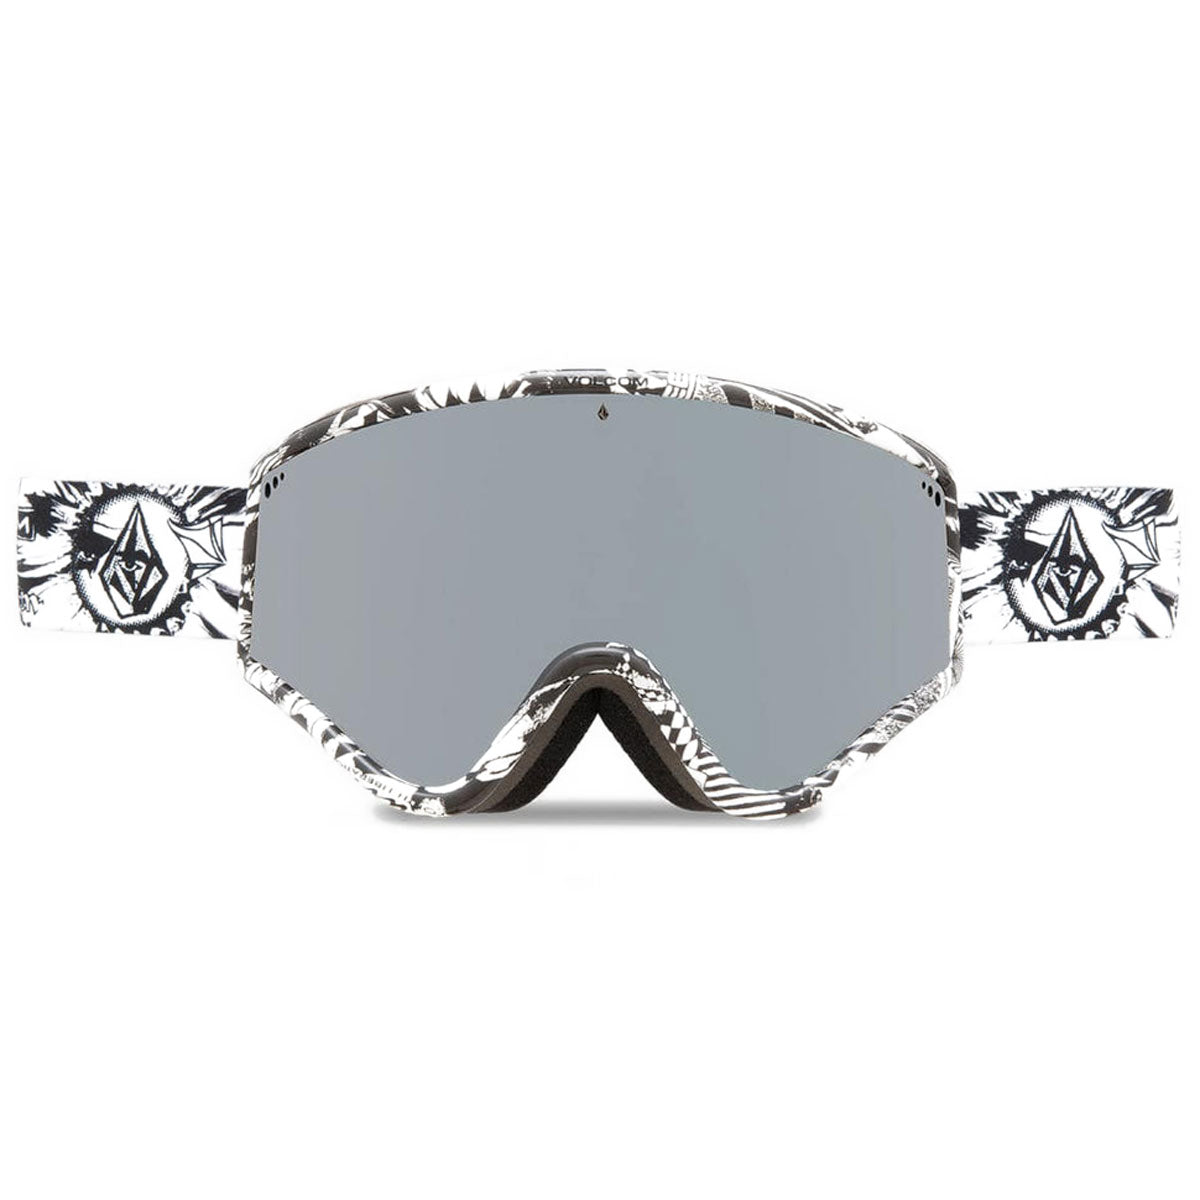 Volcom Yae Snowboard Goggles - OP Art/Silver Chrome image 1